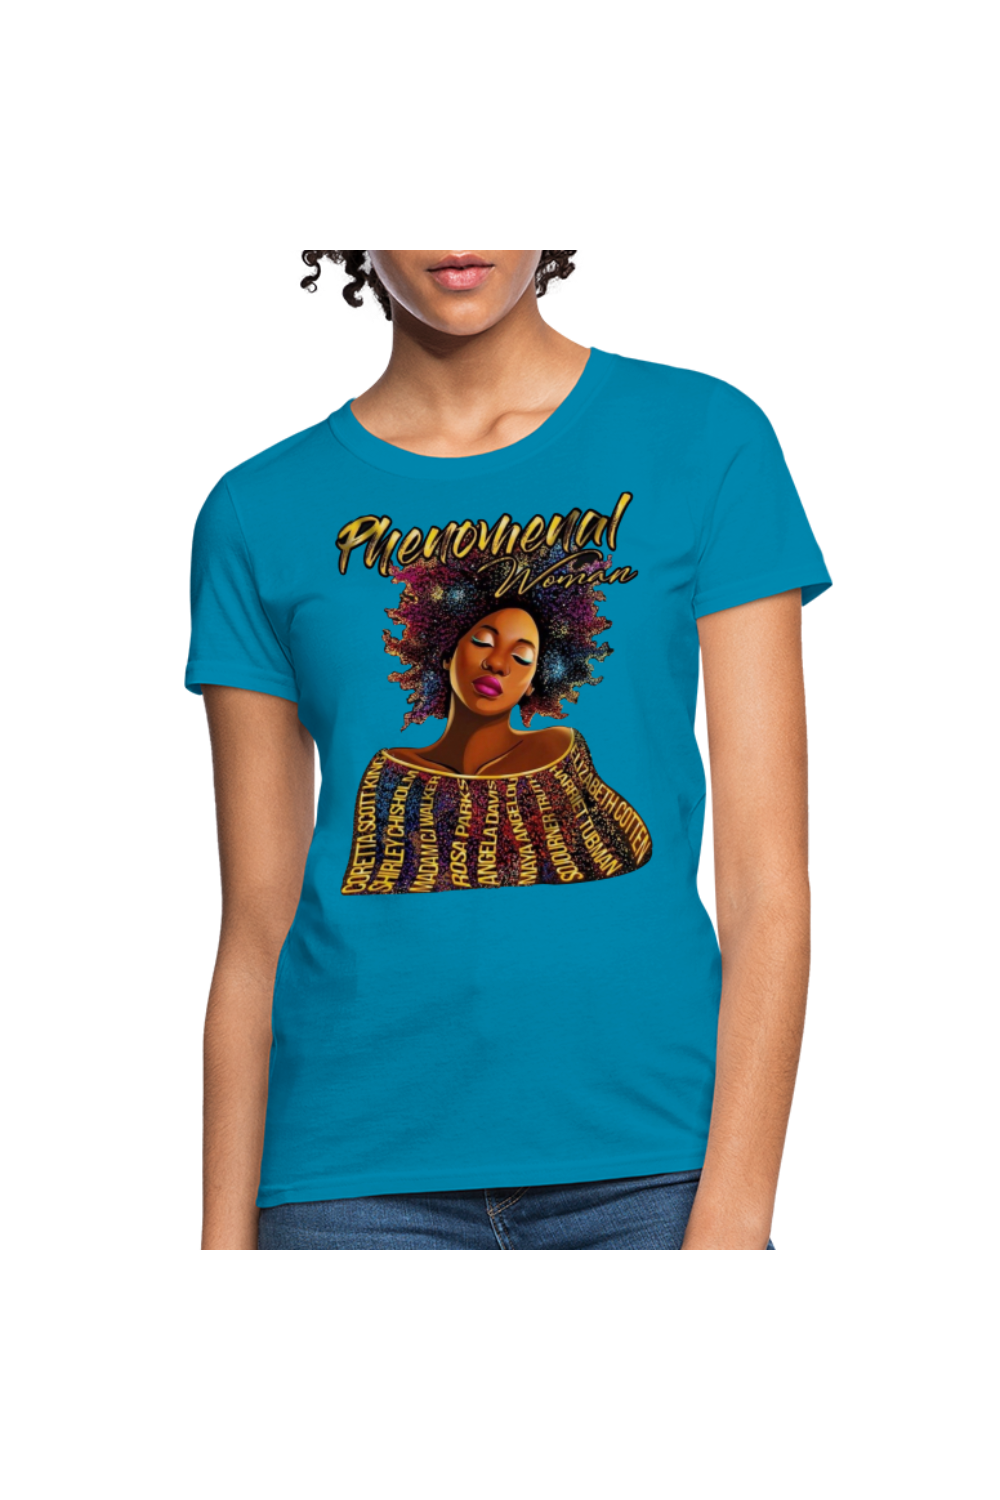 African American Women's Phenomenal Woman Short Sleeve T-Shirt - turquoise